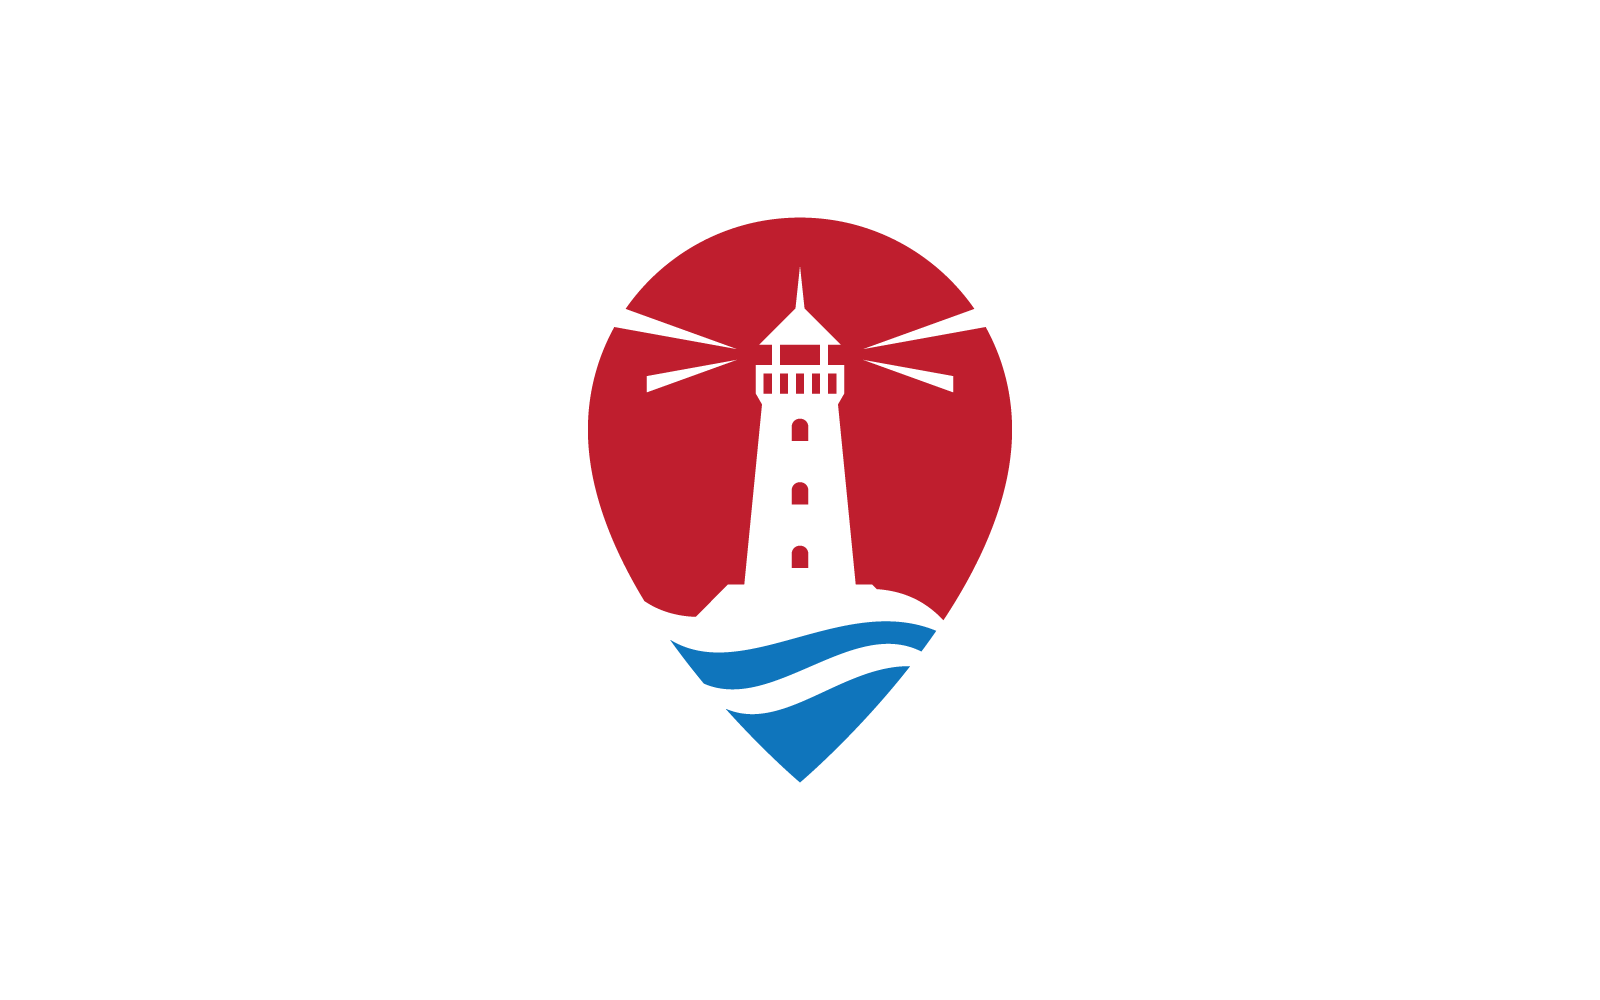 Szablon logo wektor ilustracja latarnia morska